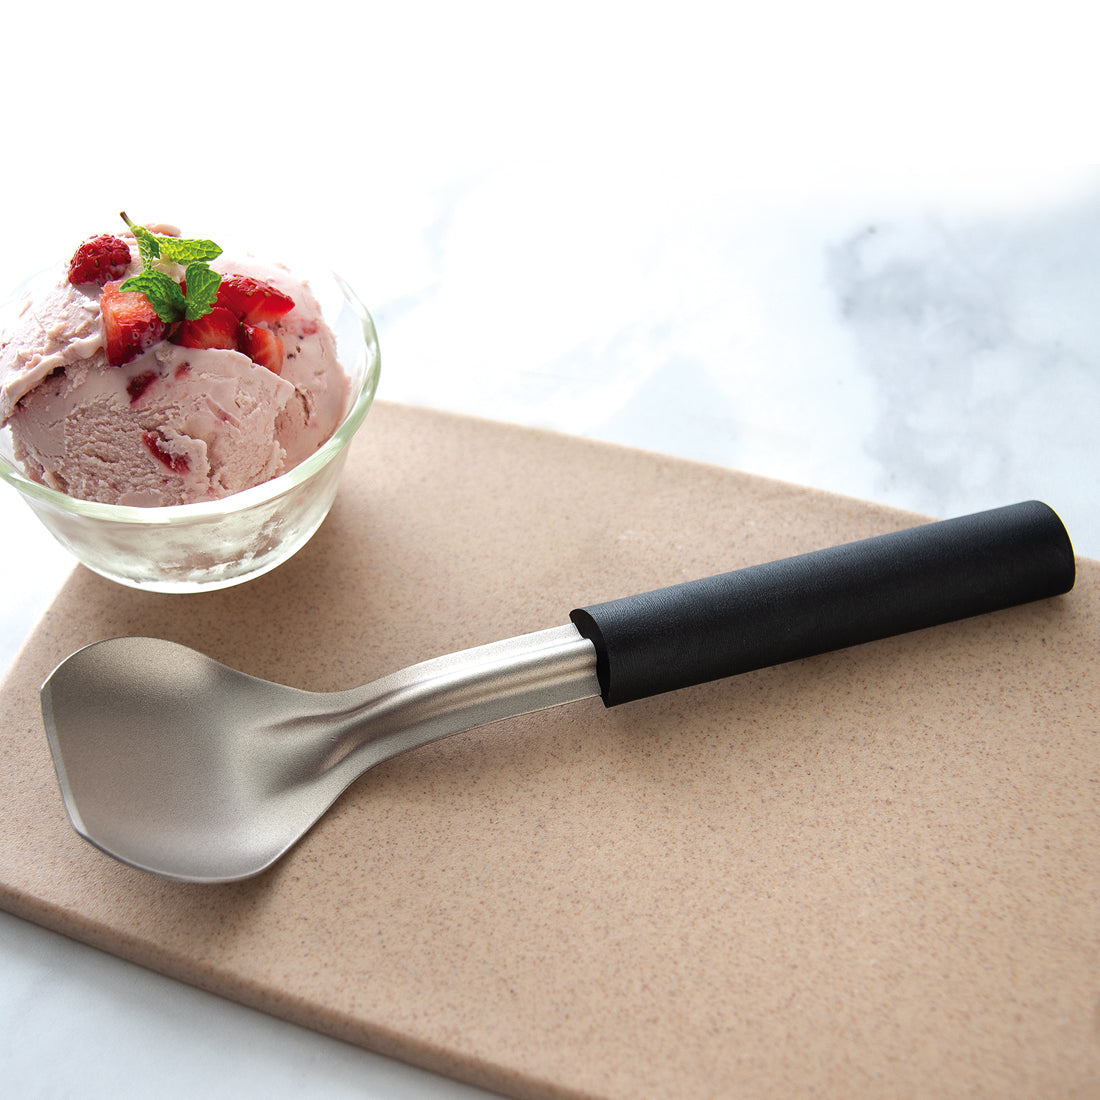 https://www.momjunction.com/wp-content/uploads/product-images/rada-cutlery-ice-cream-scoop_afl216.jpg